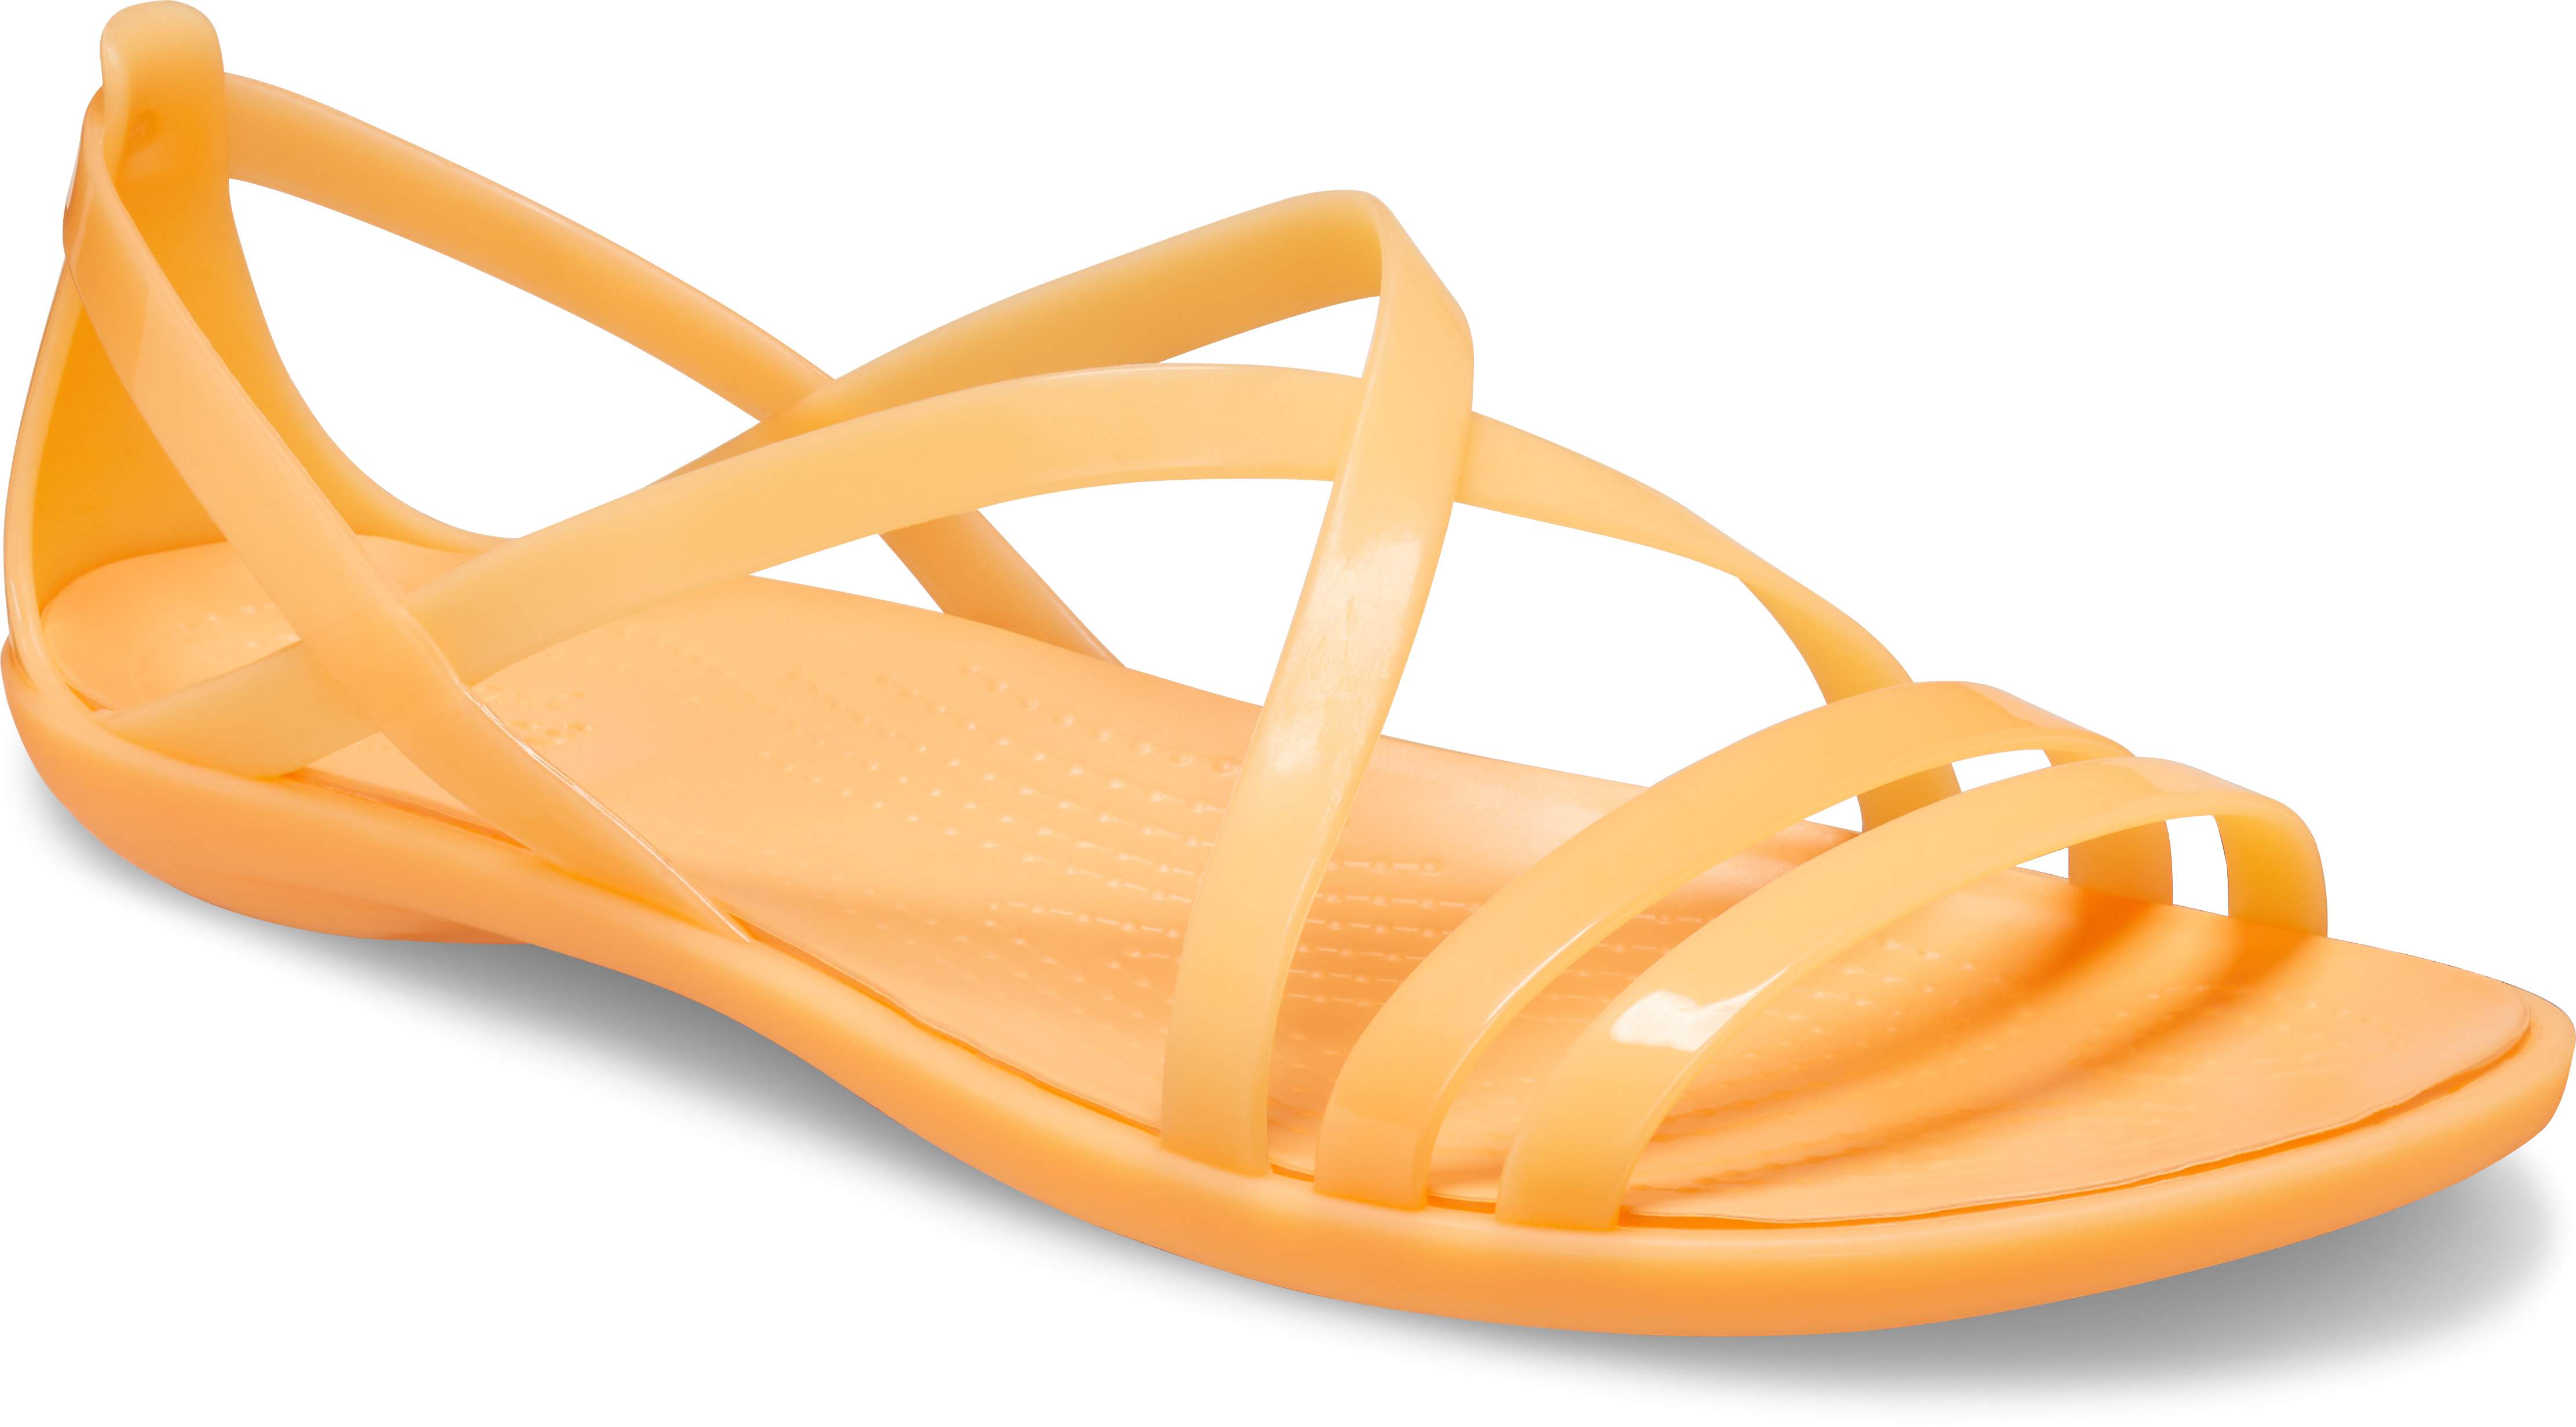 women's crocs isabella strappy sandals